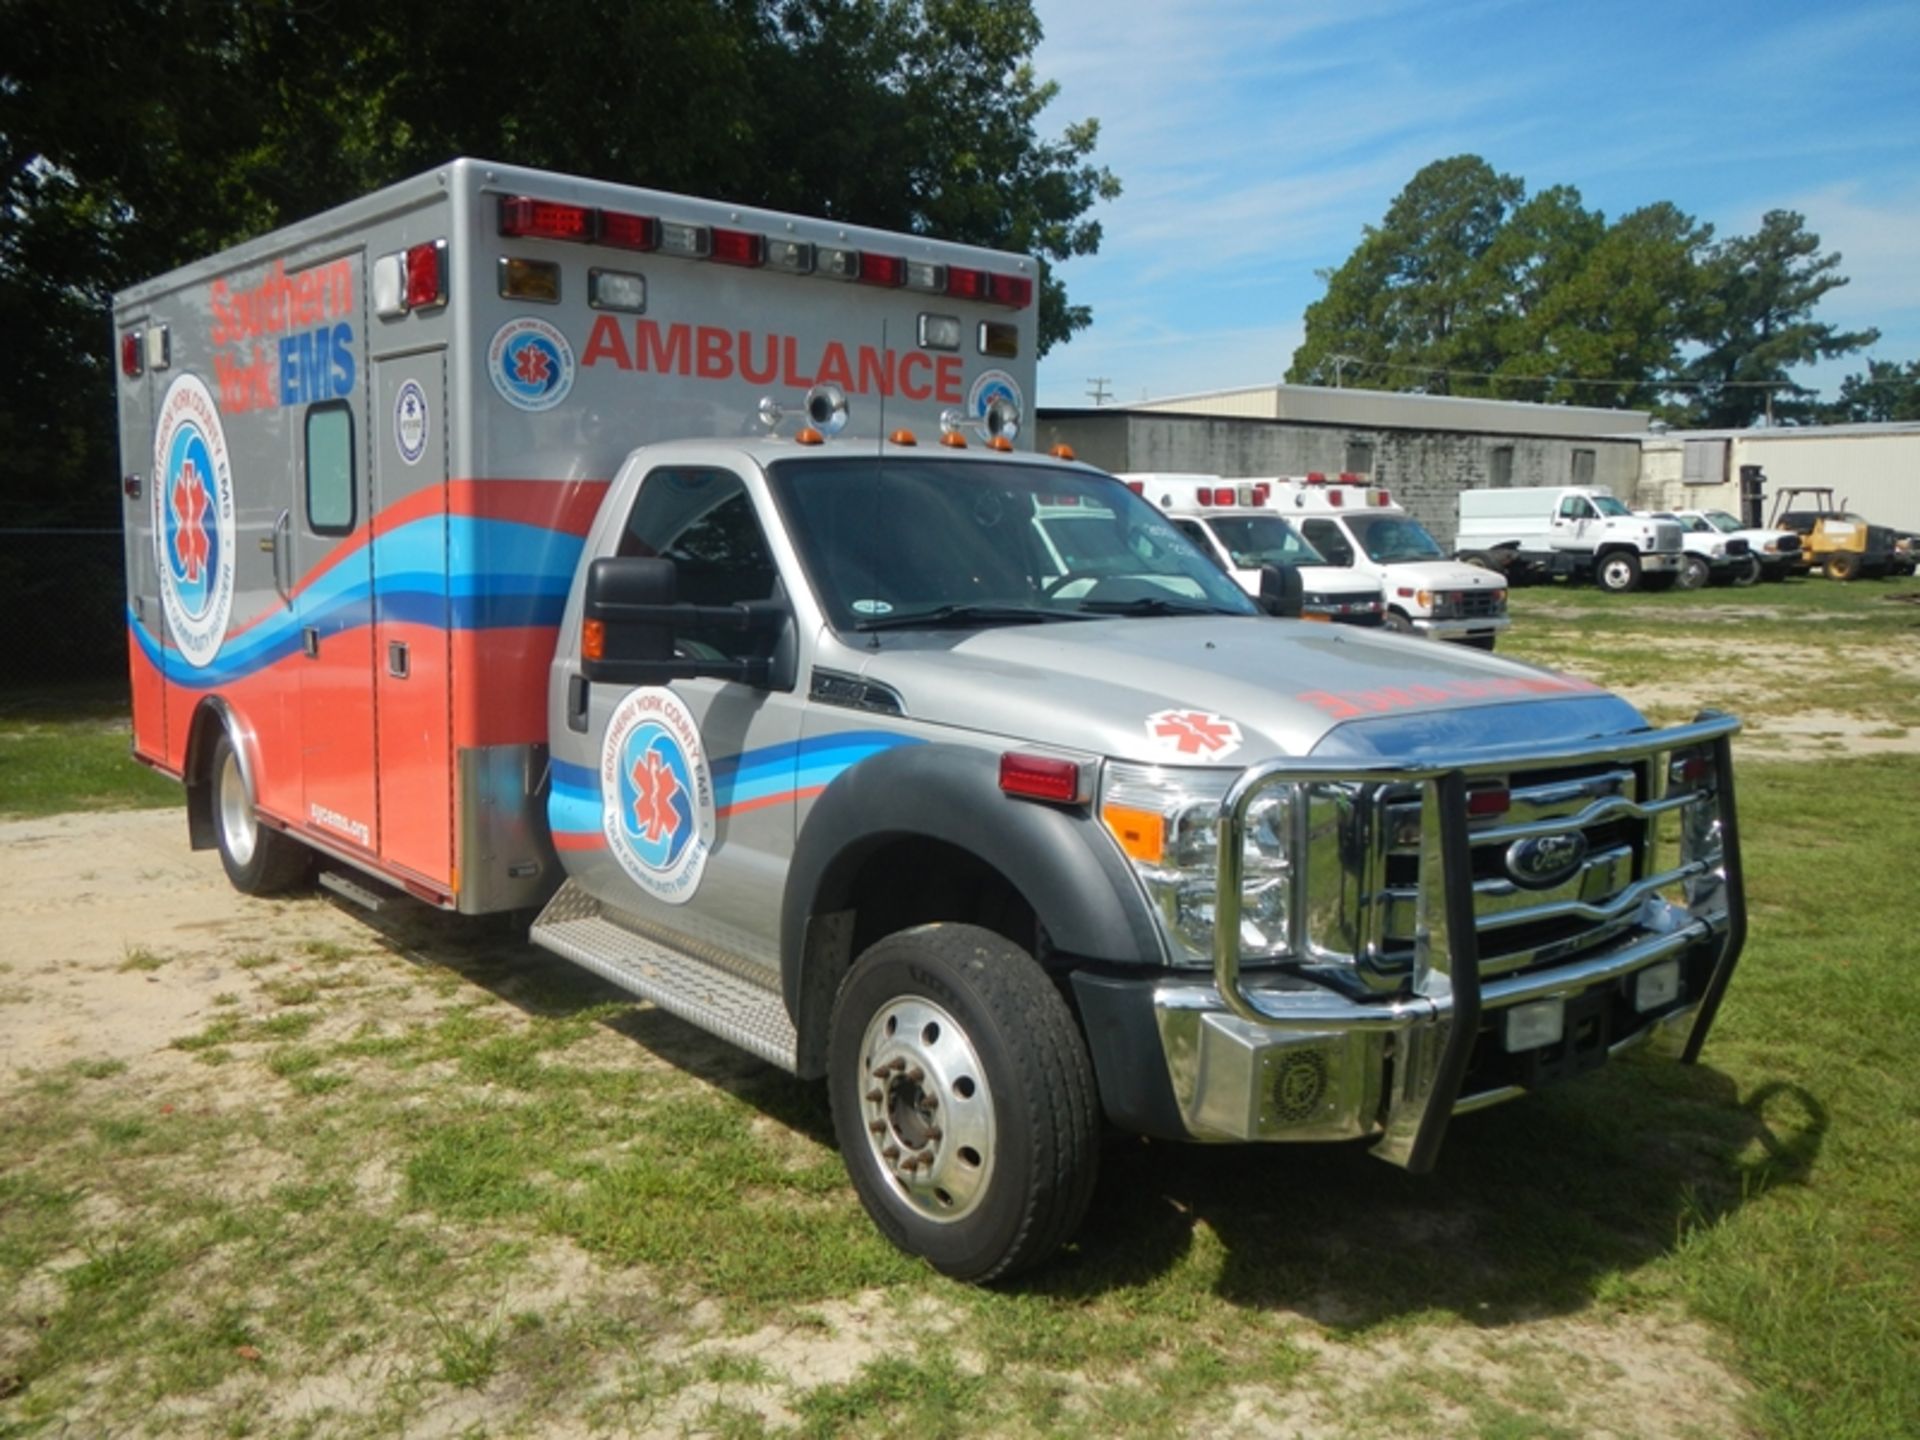 2011 FORD F-450 XLT Type I Ambulance - Image 2 of 6